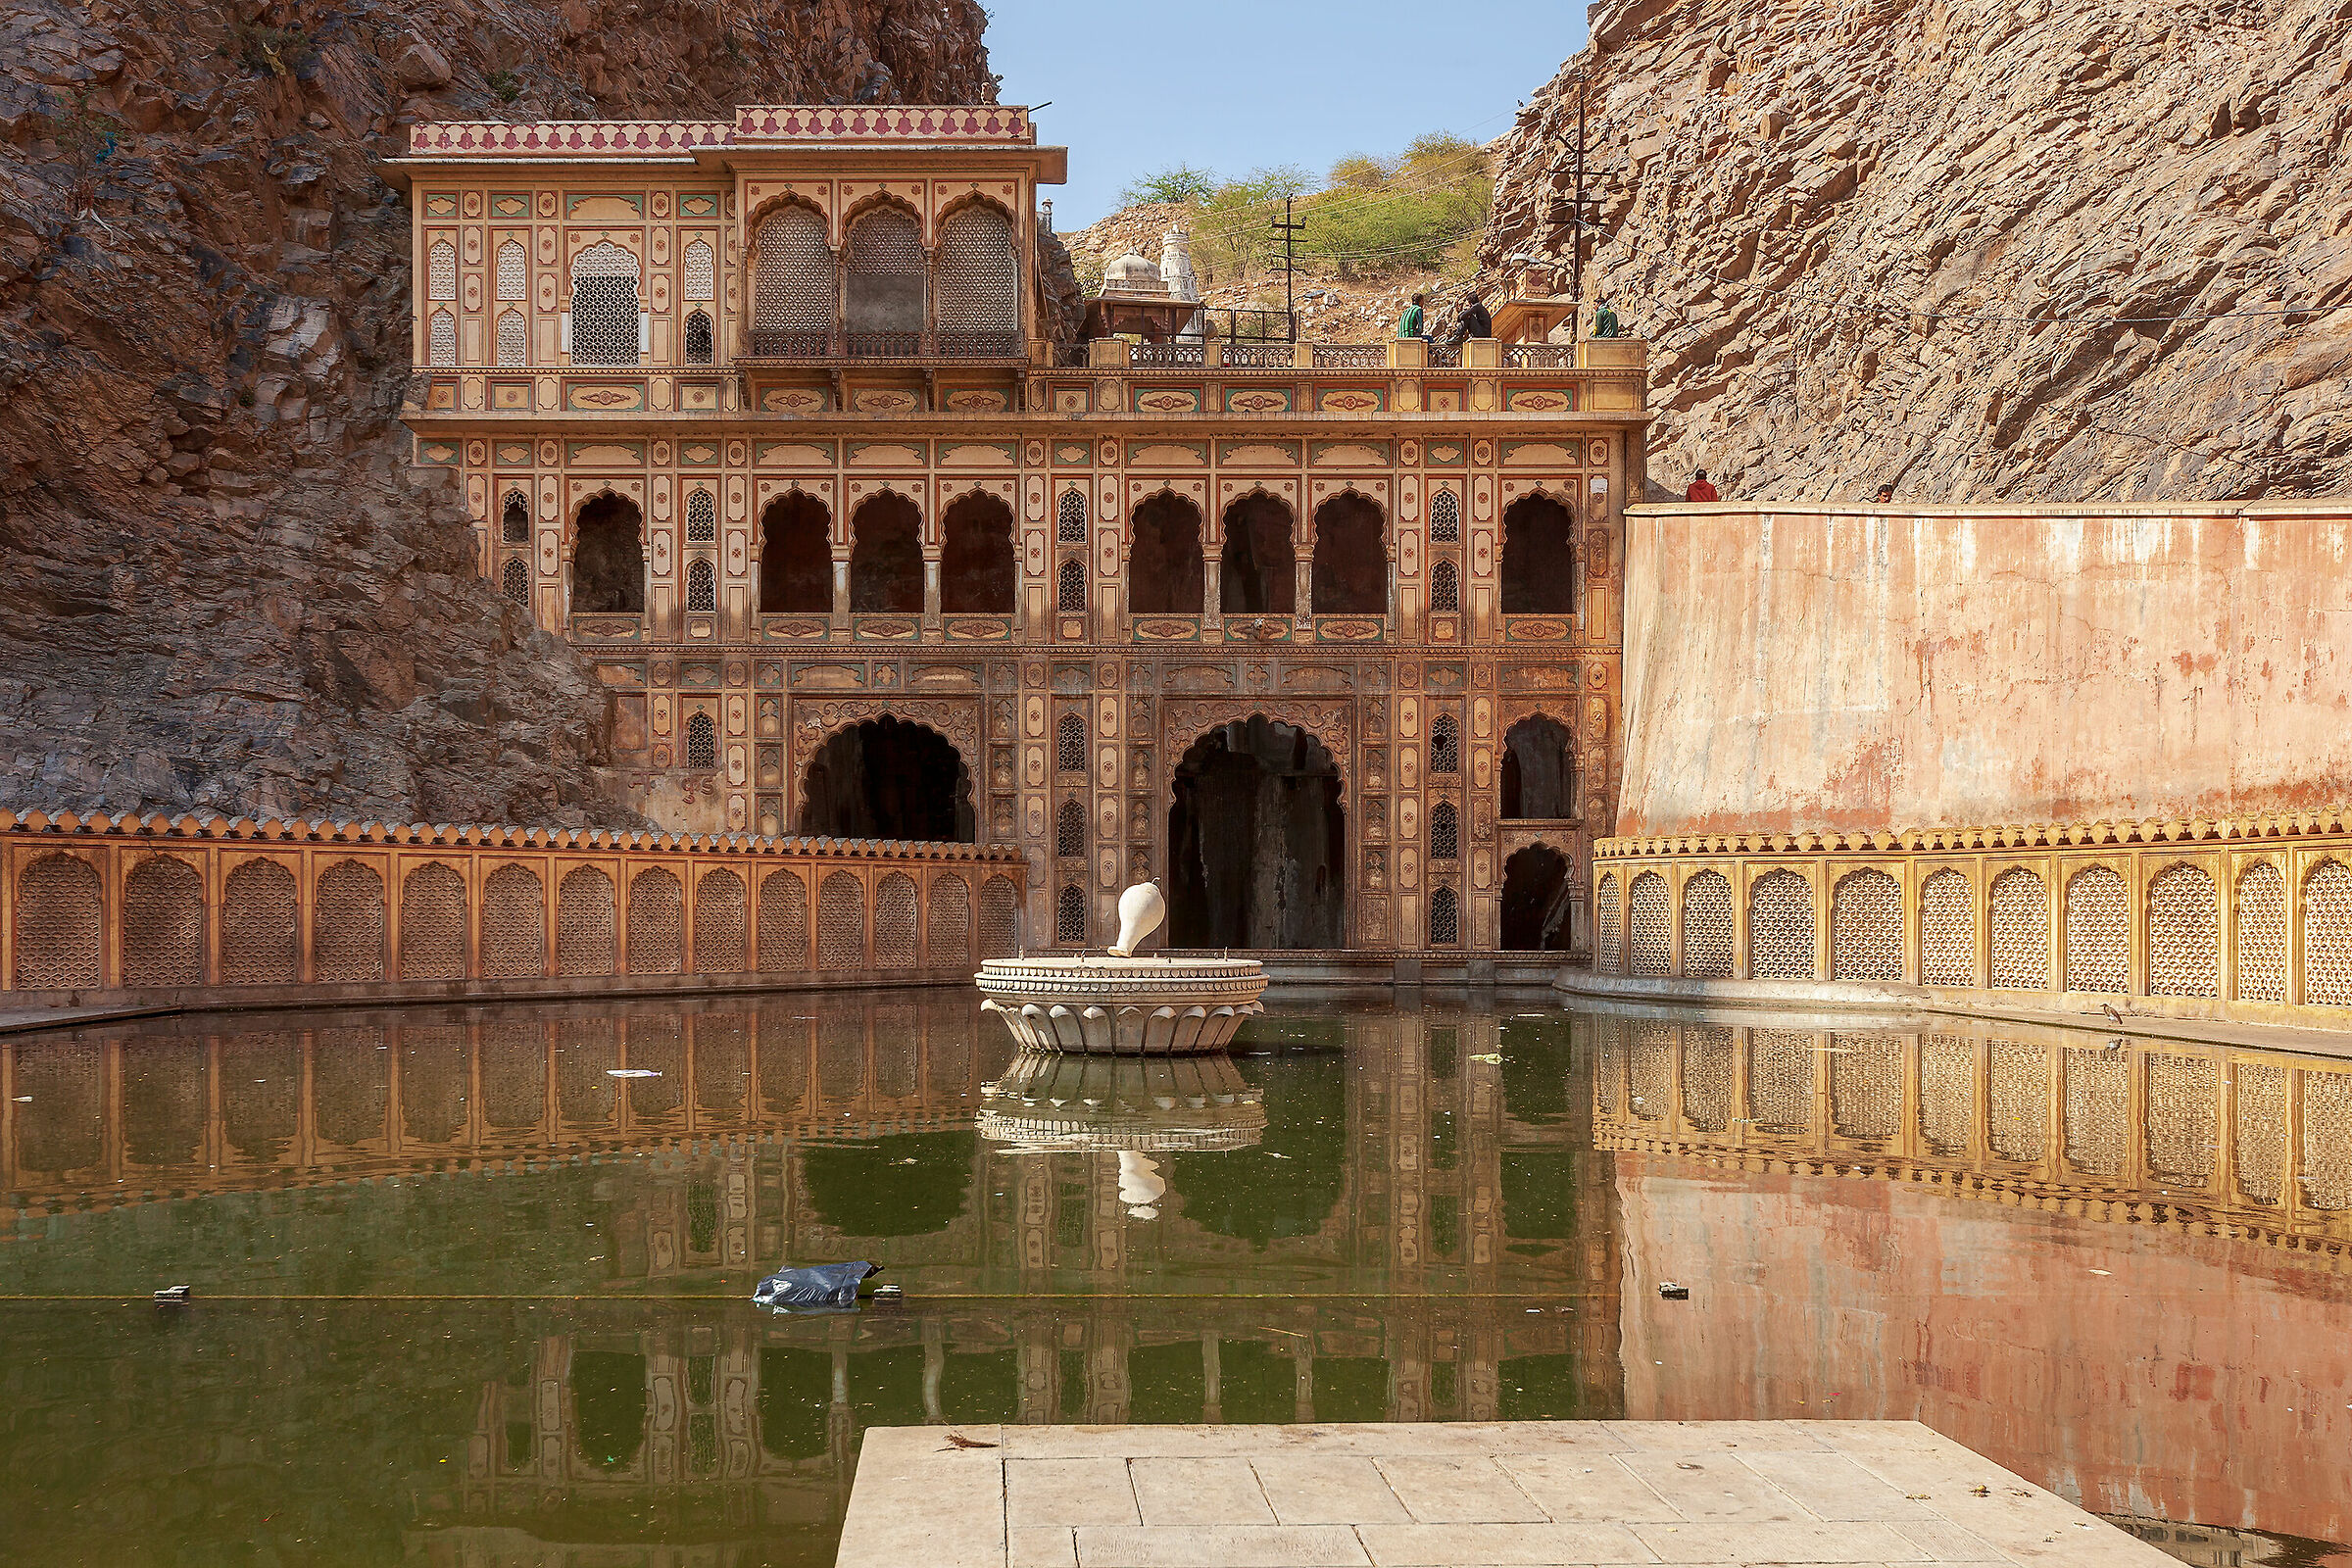 Galta monkey temple Jaipur...